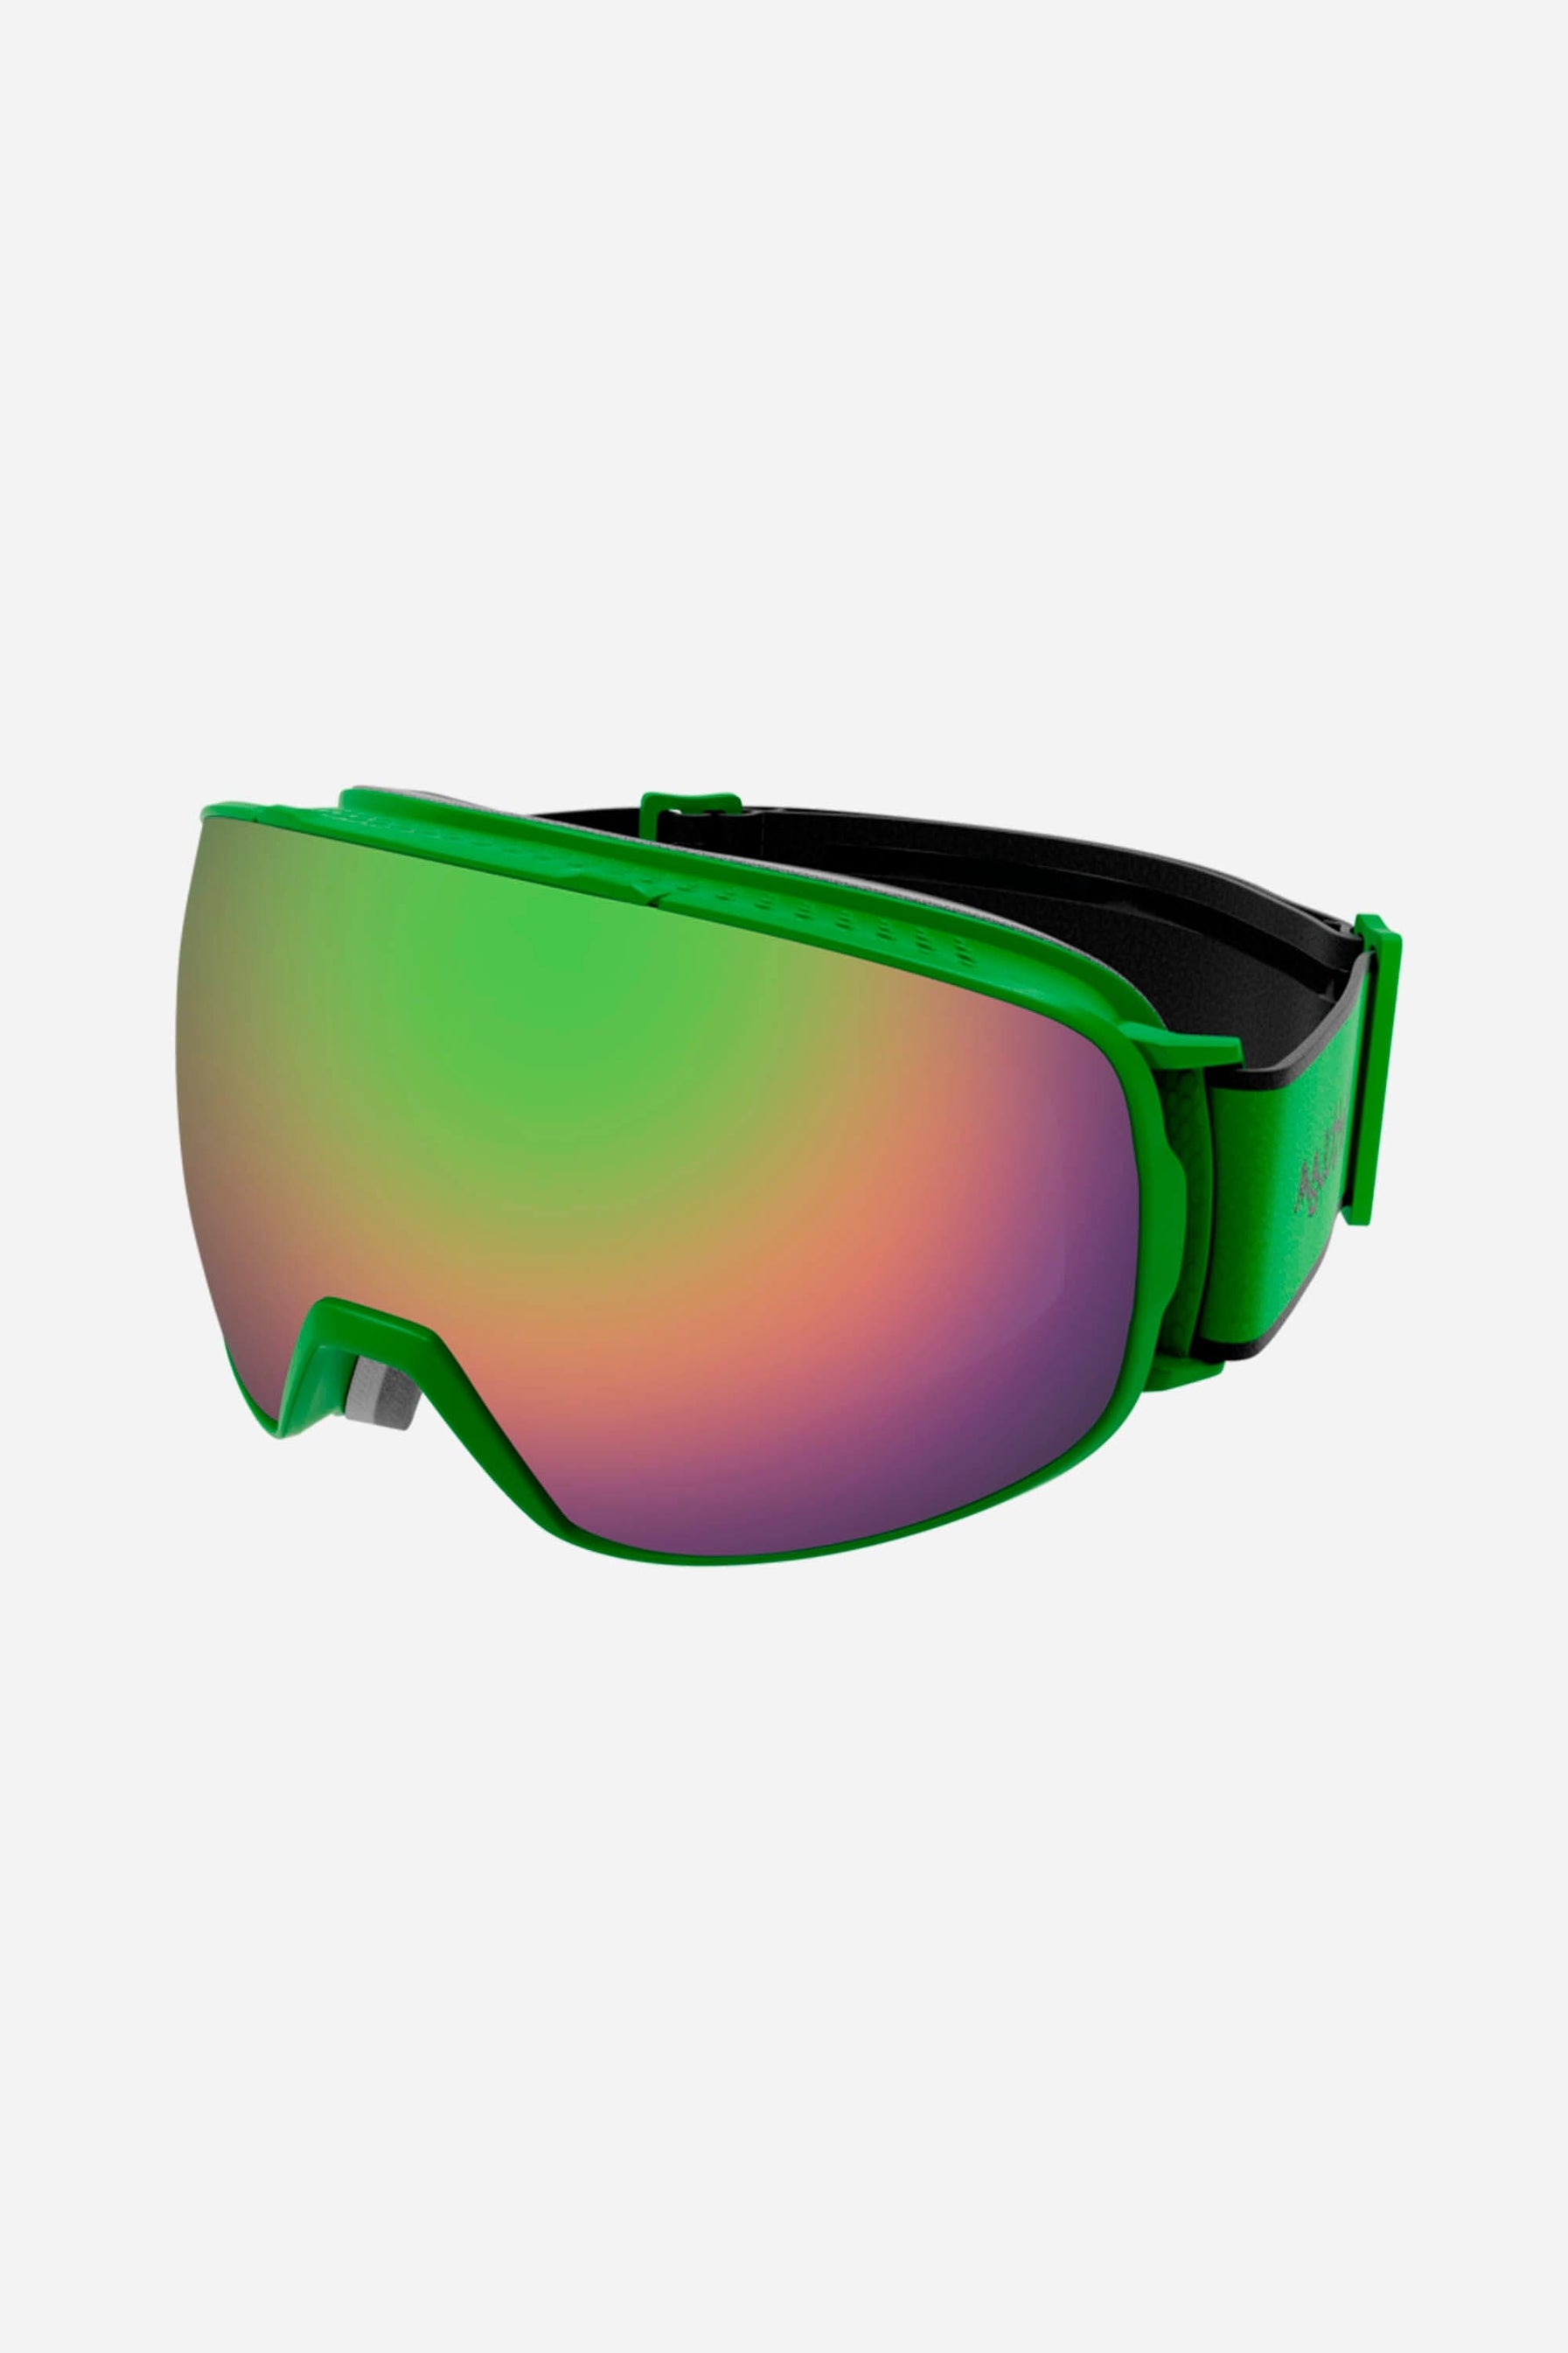 Bottega Veneta green ski mask - Eyewear Club